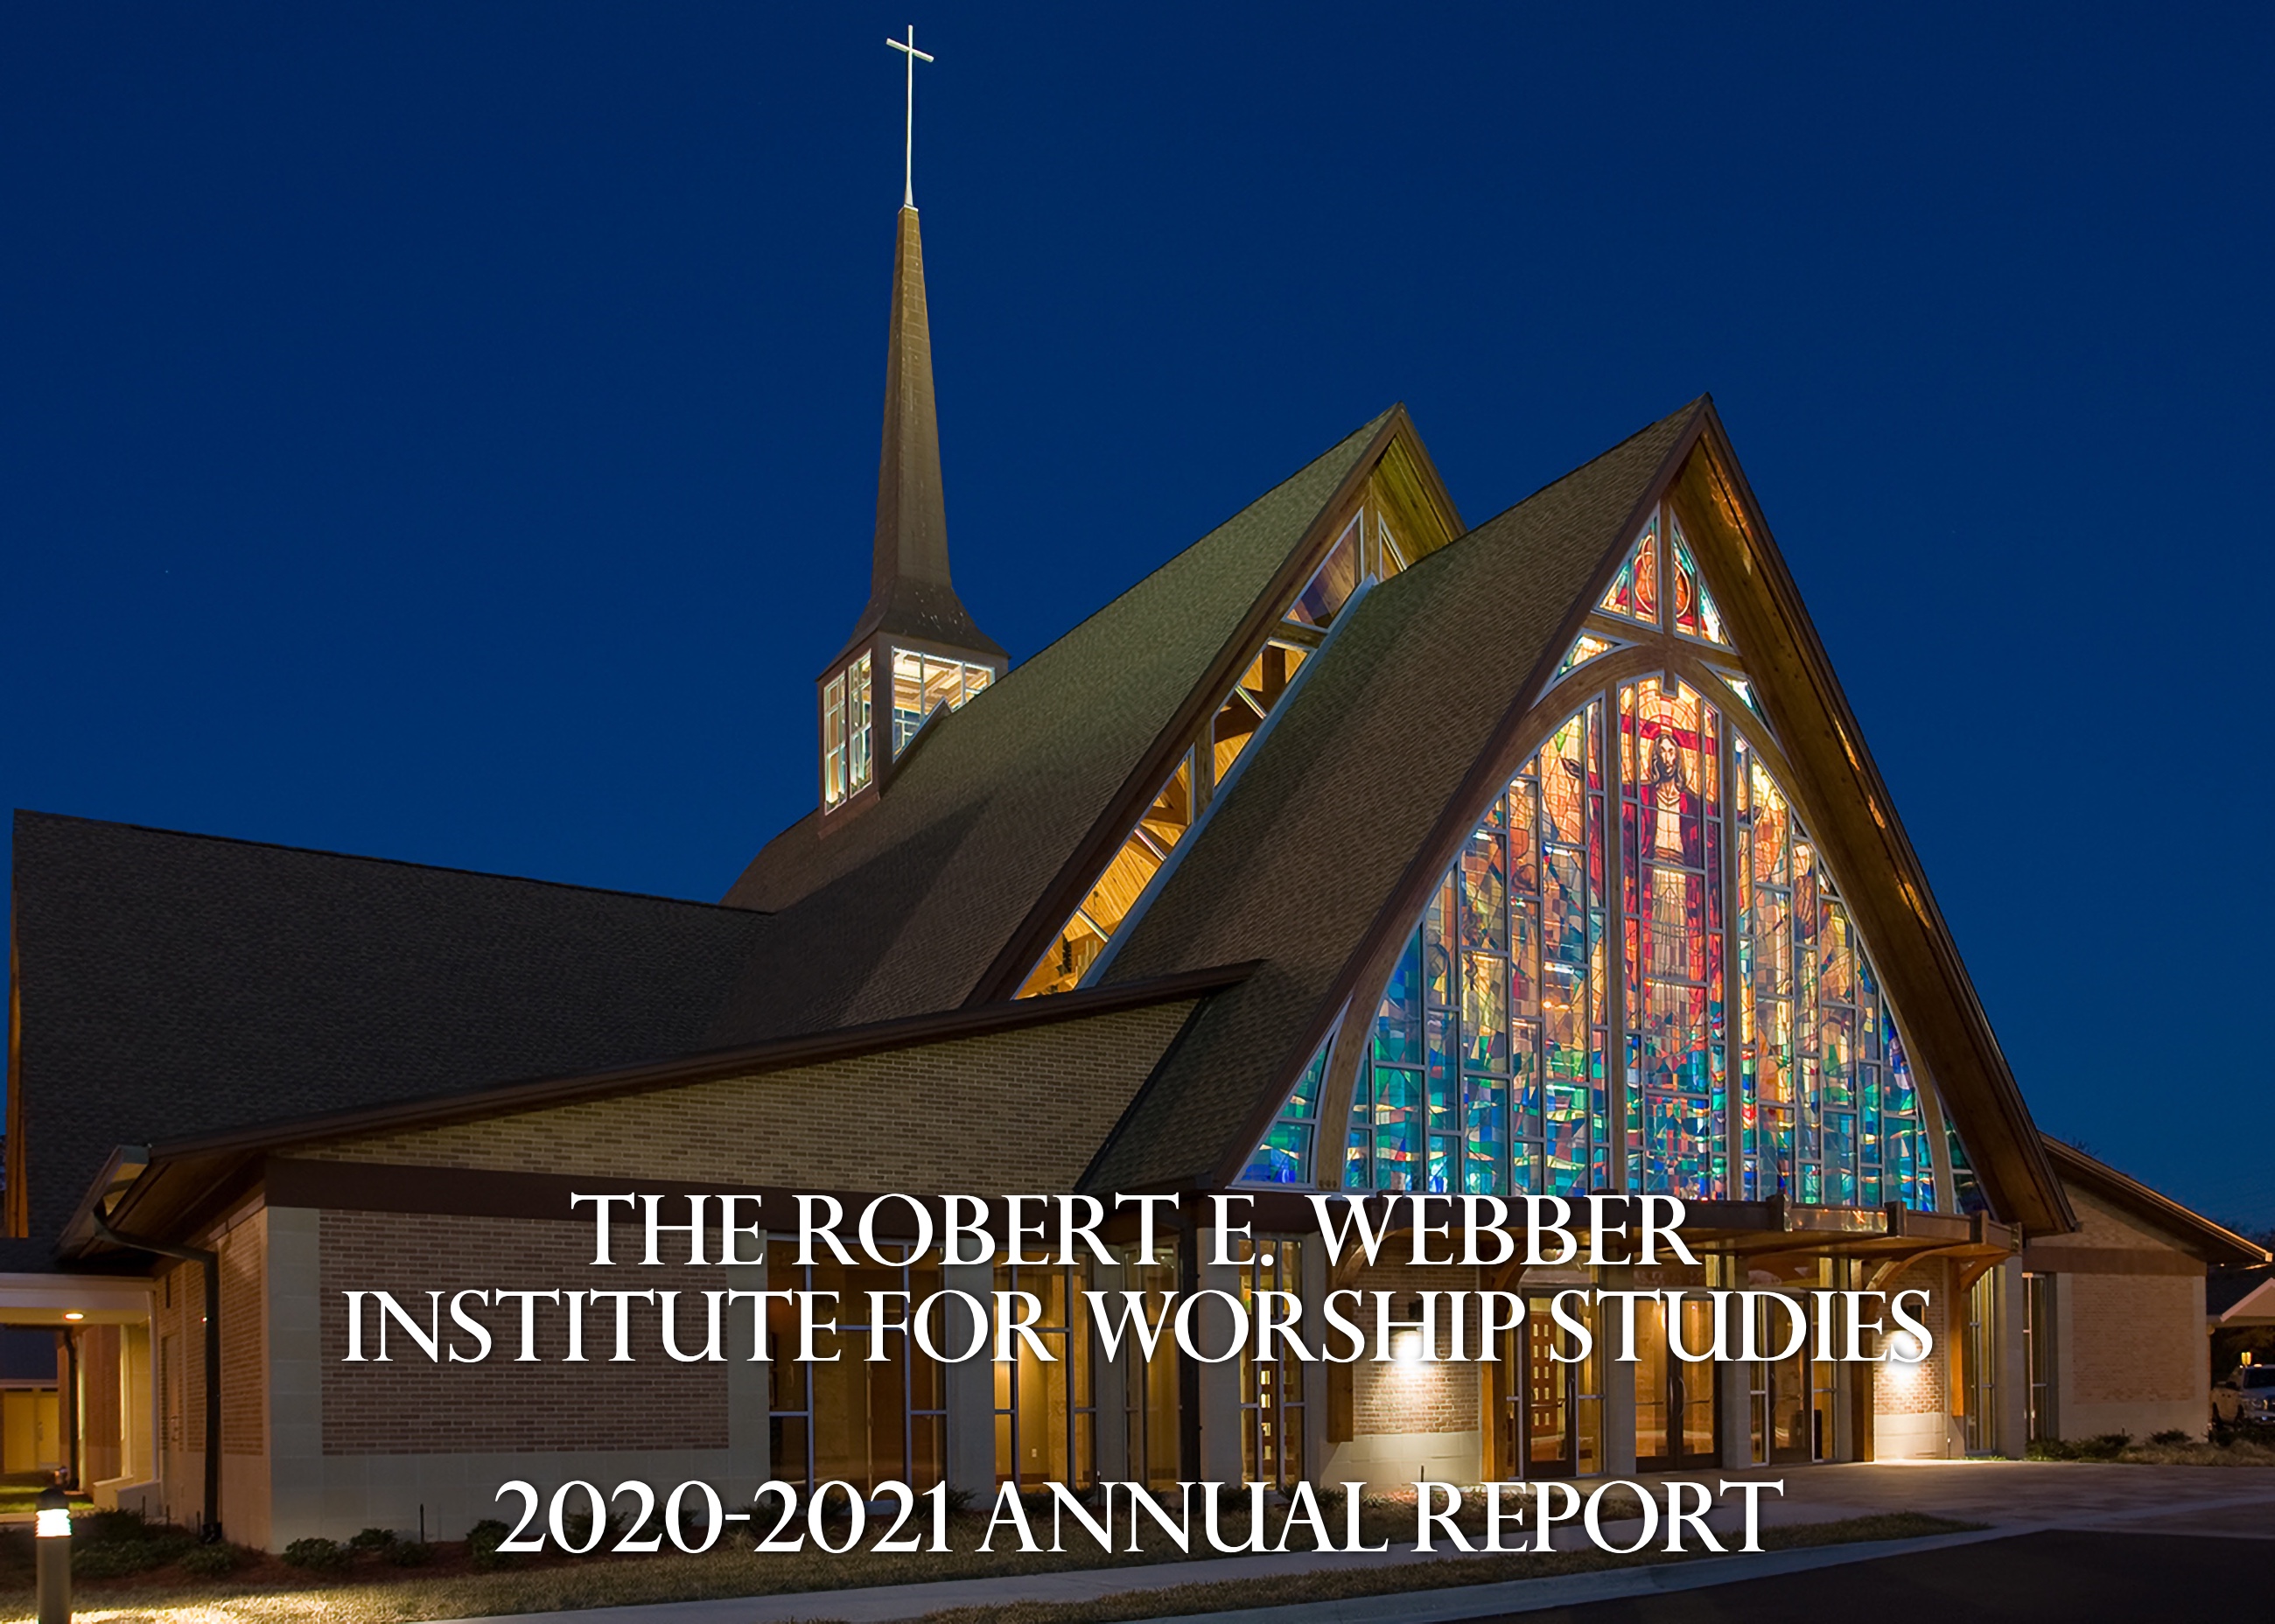 The Robert E. Webber Institute for Worship Studies 2020-2021 Annual Report